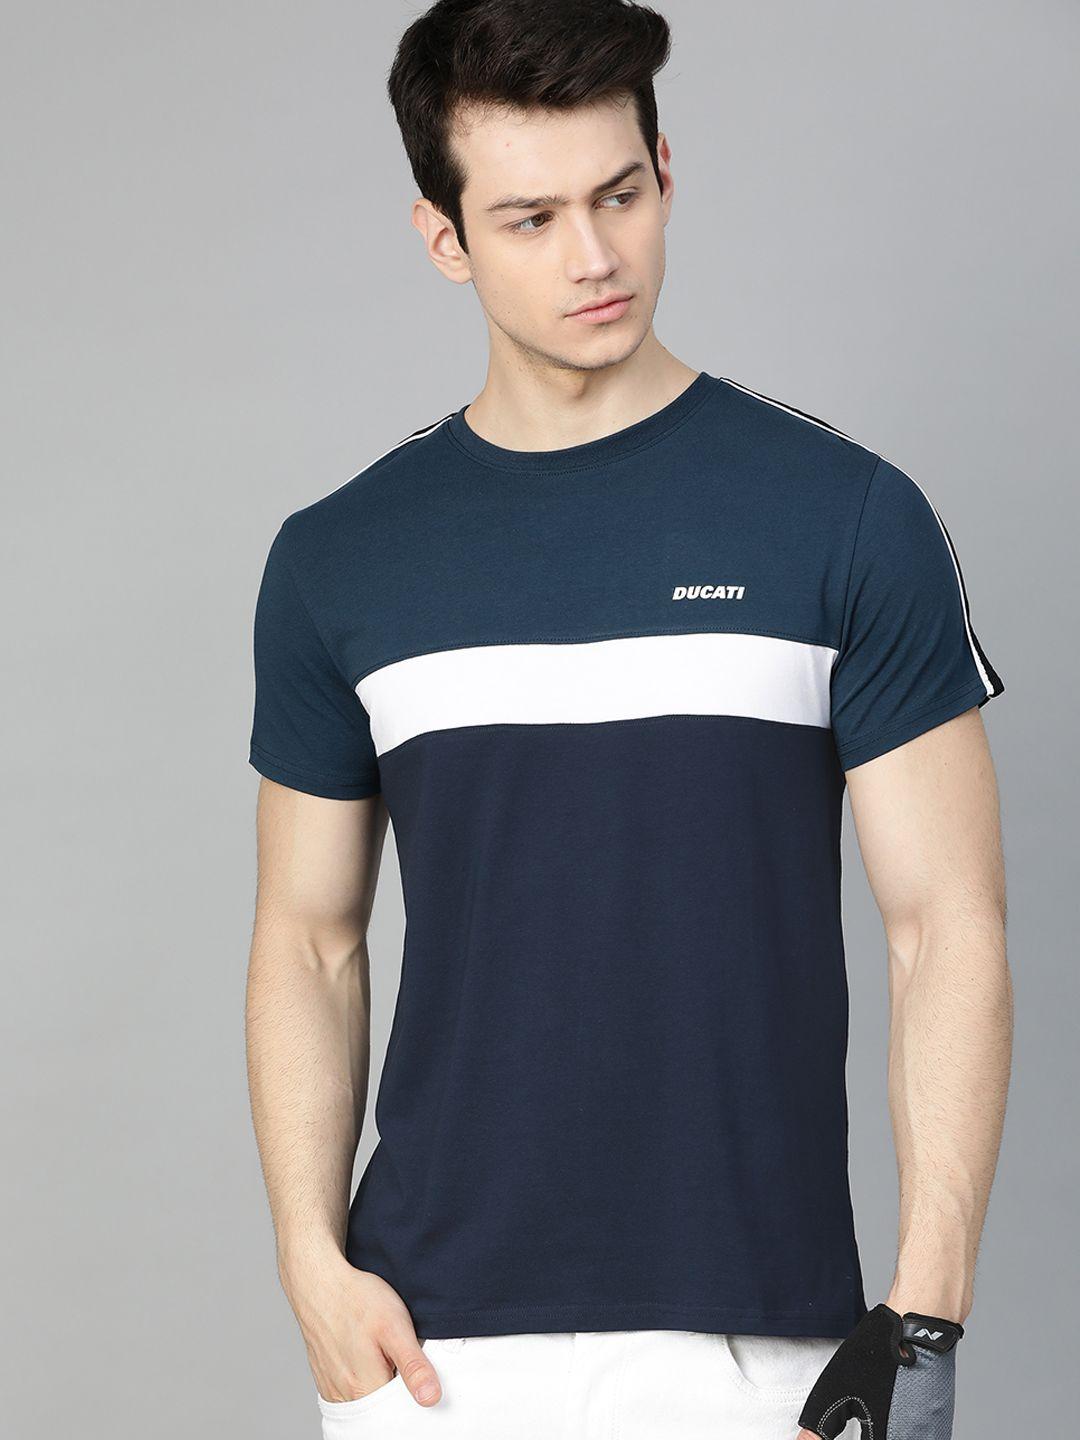 ducati men navy blue & white colourblocked round neck t-shirt